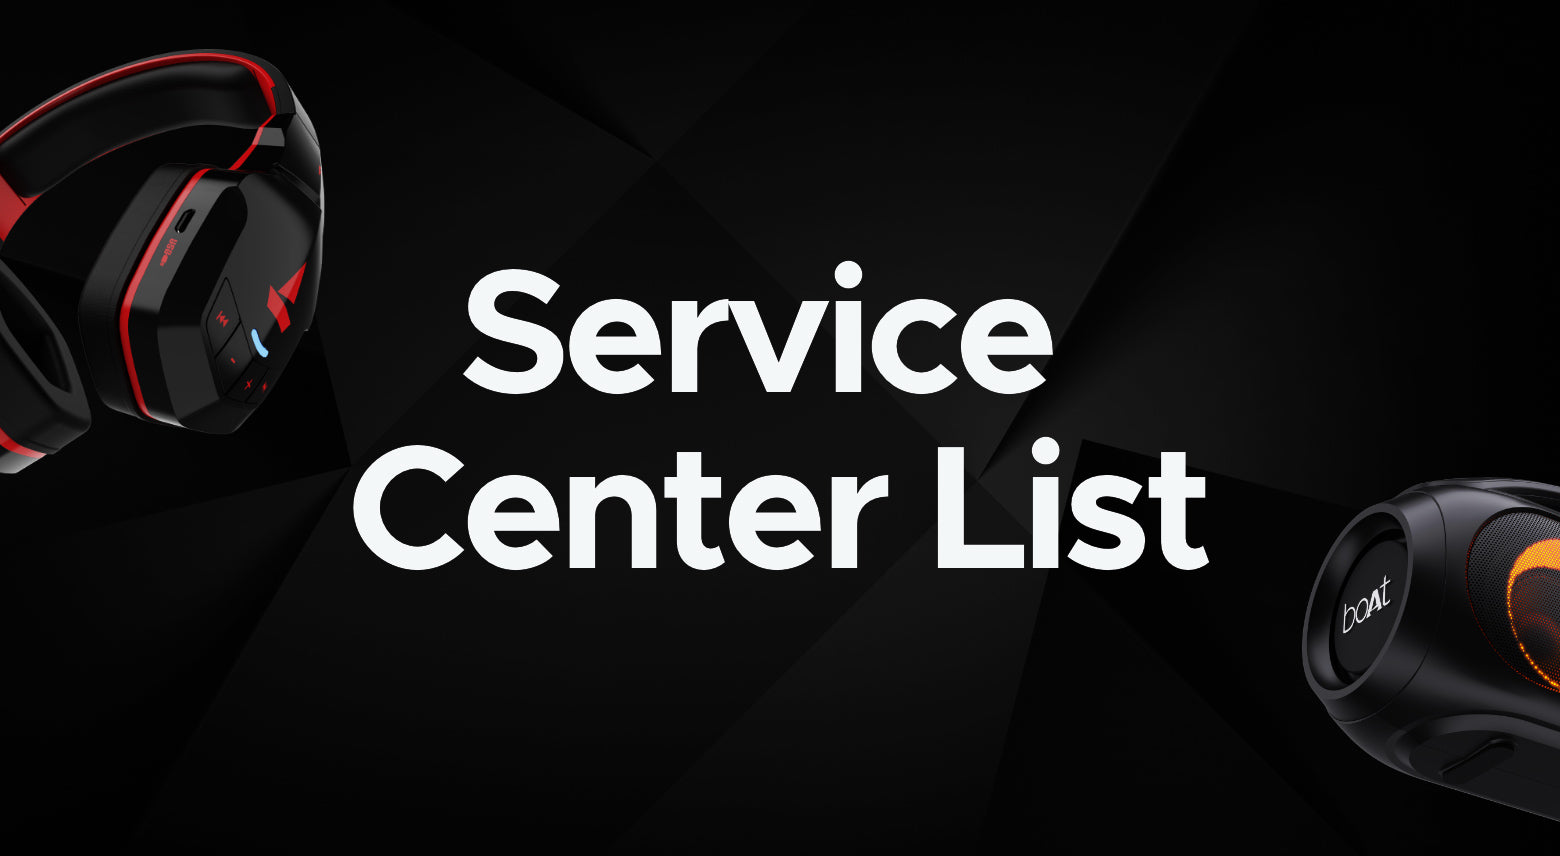 Service Center List